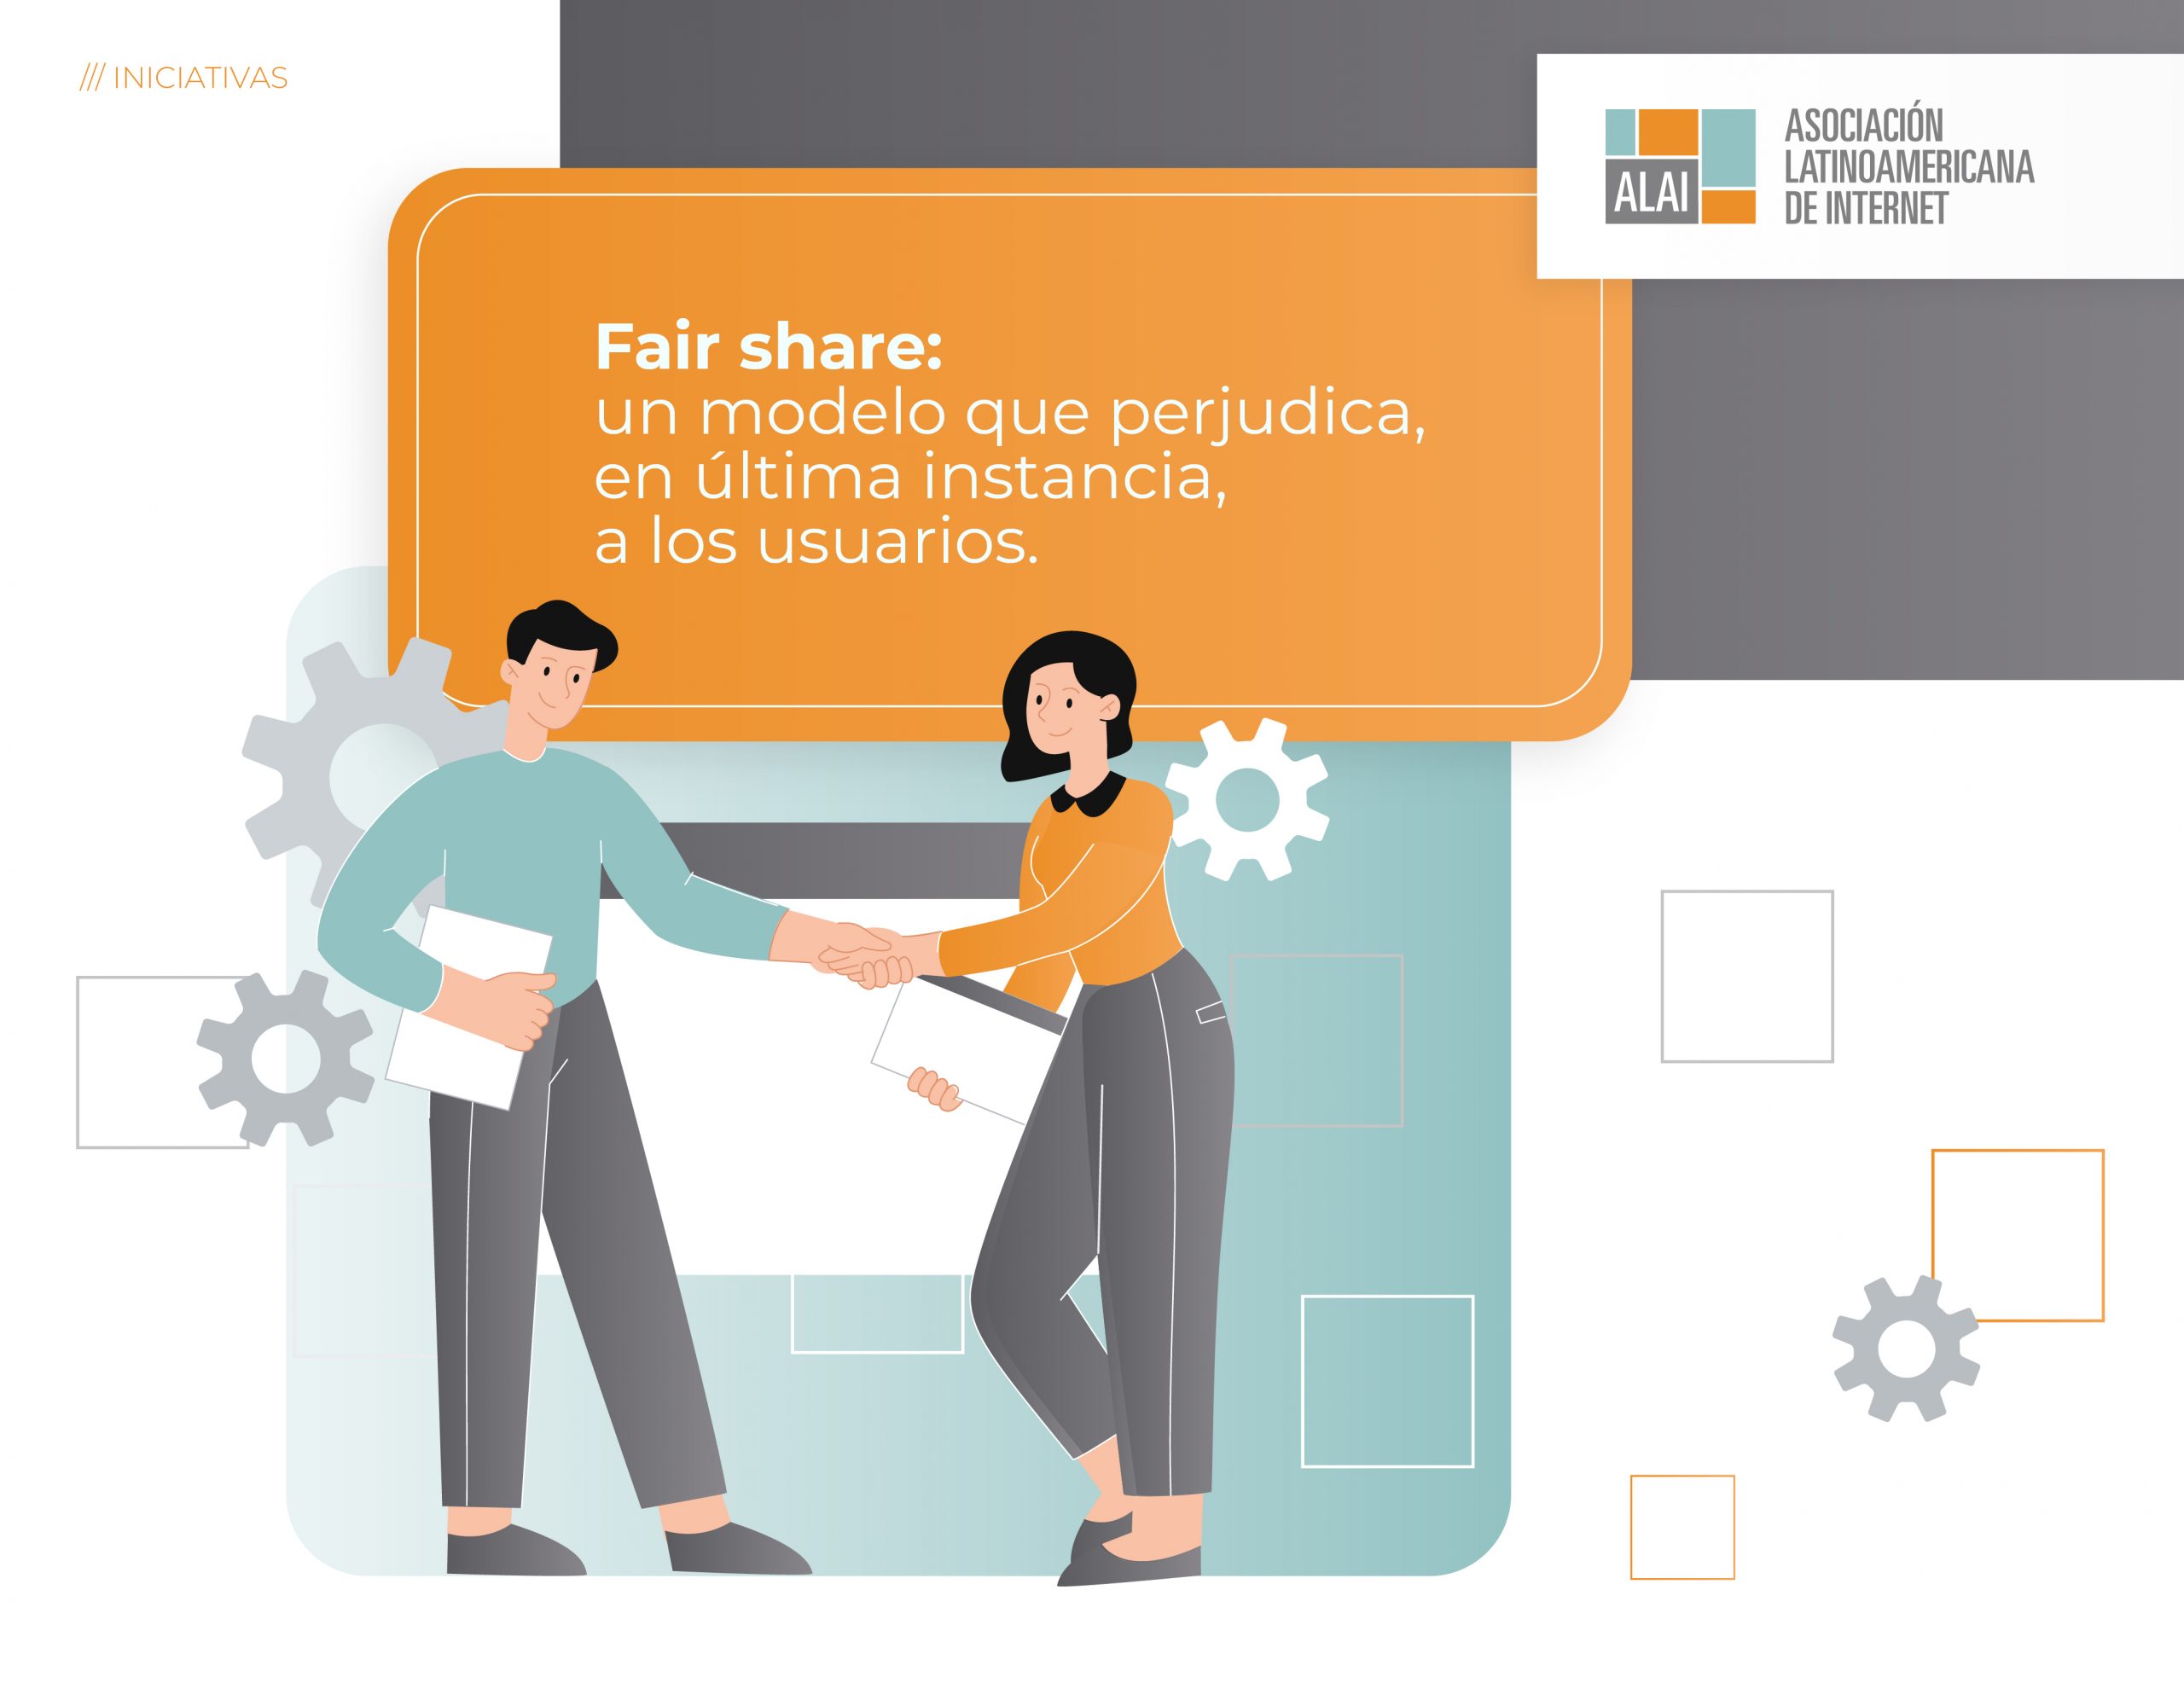 Fair share: un modelo que perjudica, en última instancia, a los usuarios